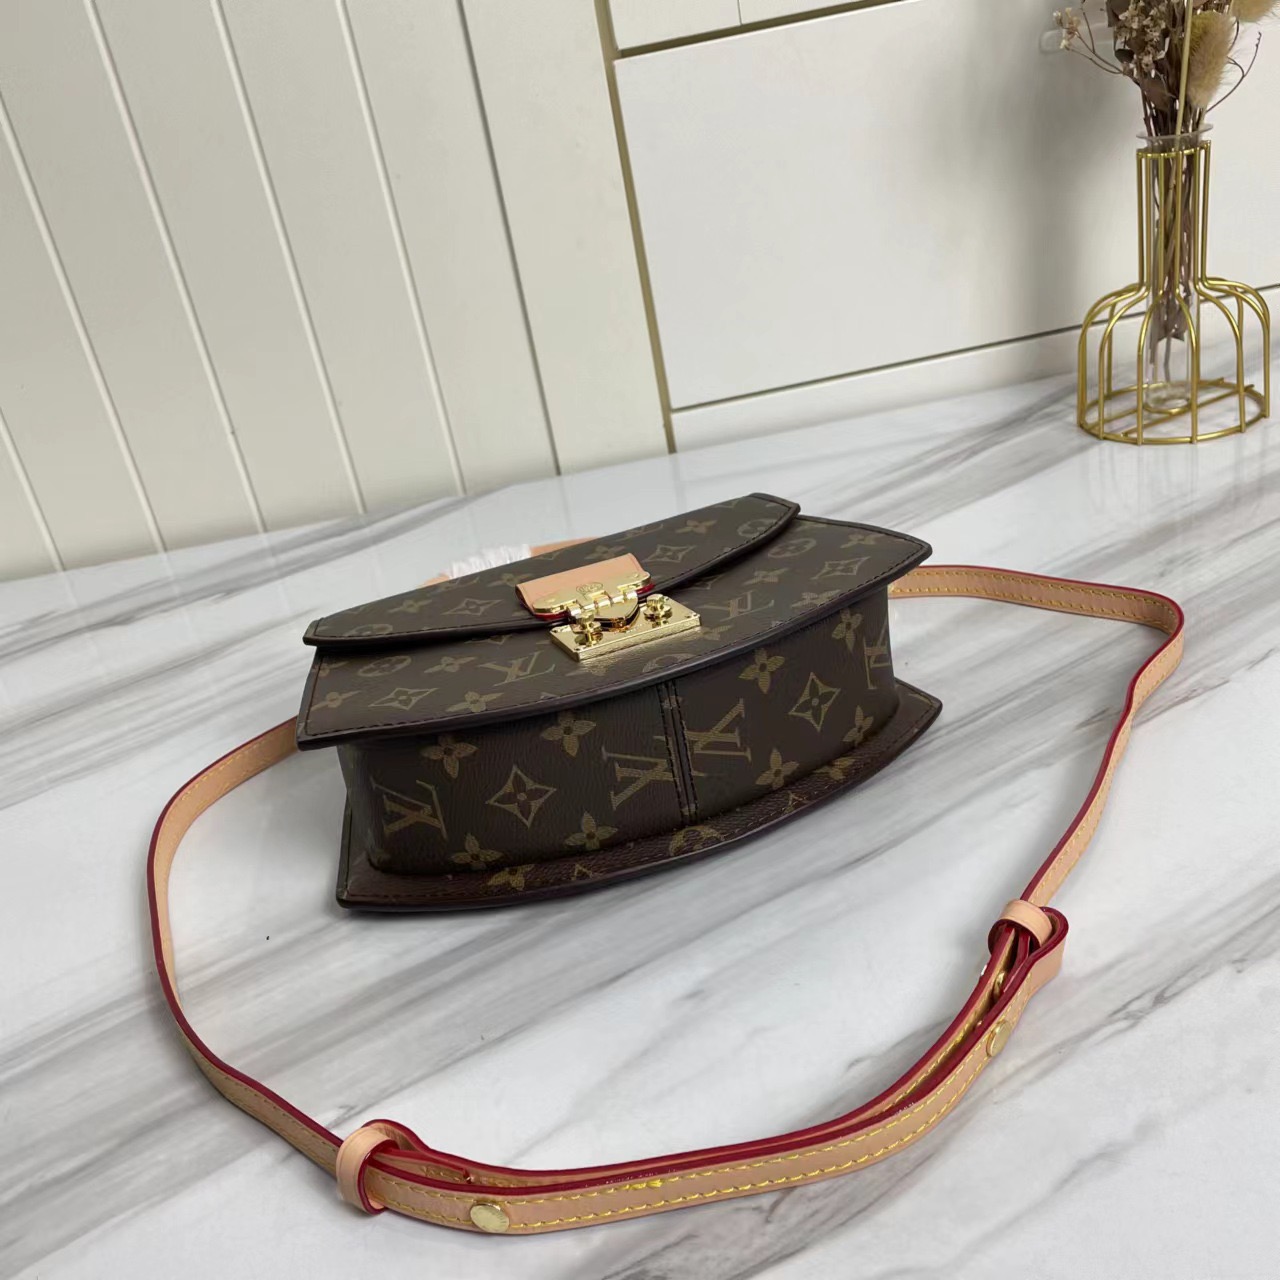 Louis Vuitton Handbags For Woemn # 268947, cheap LV Handbags, only $89!